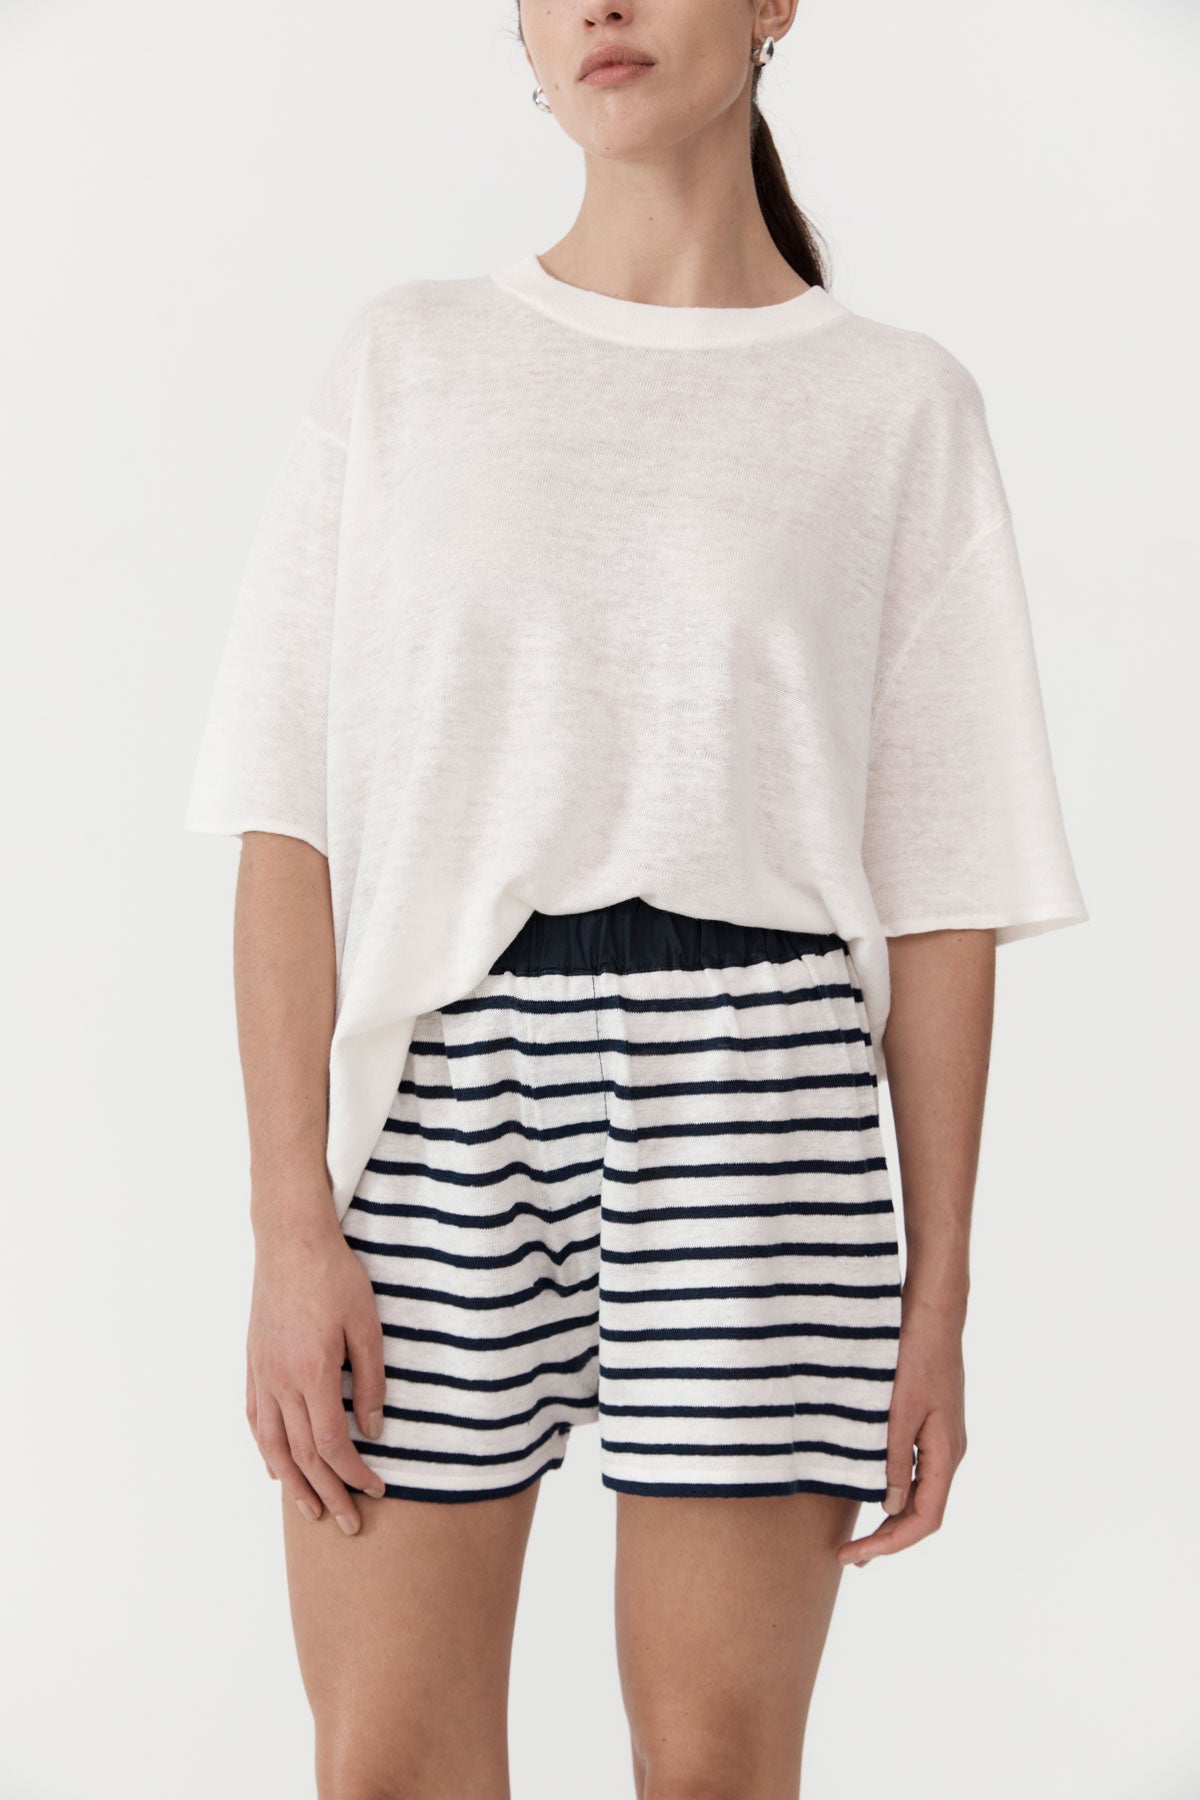 Copain Knit Shorts - Brenton Stripe